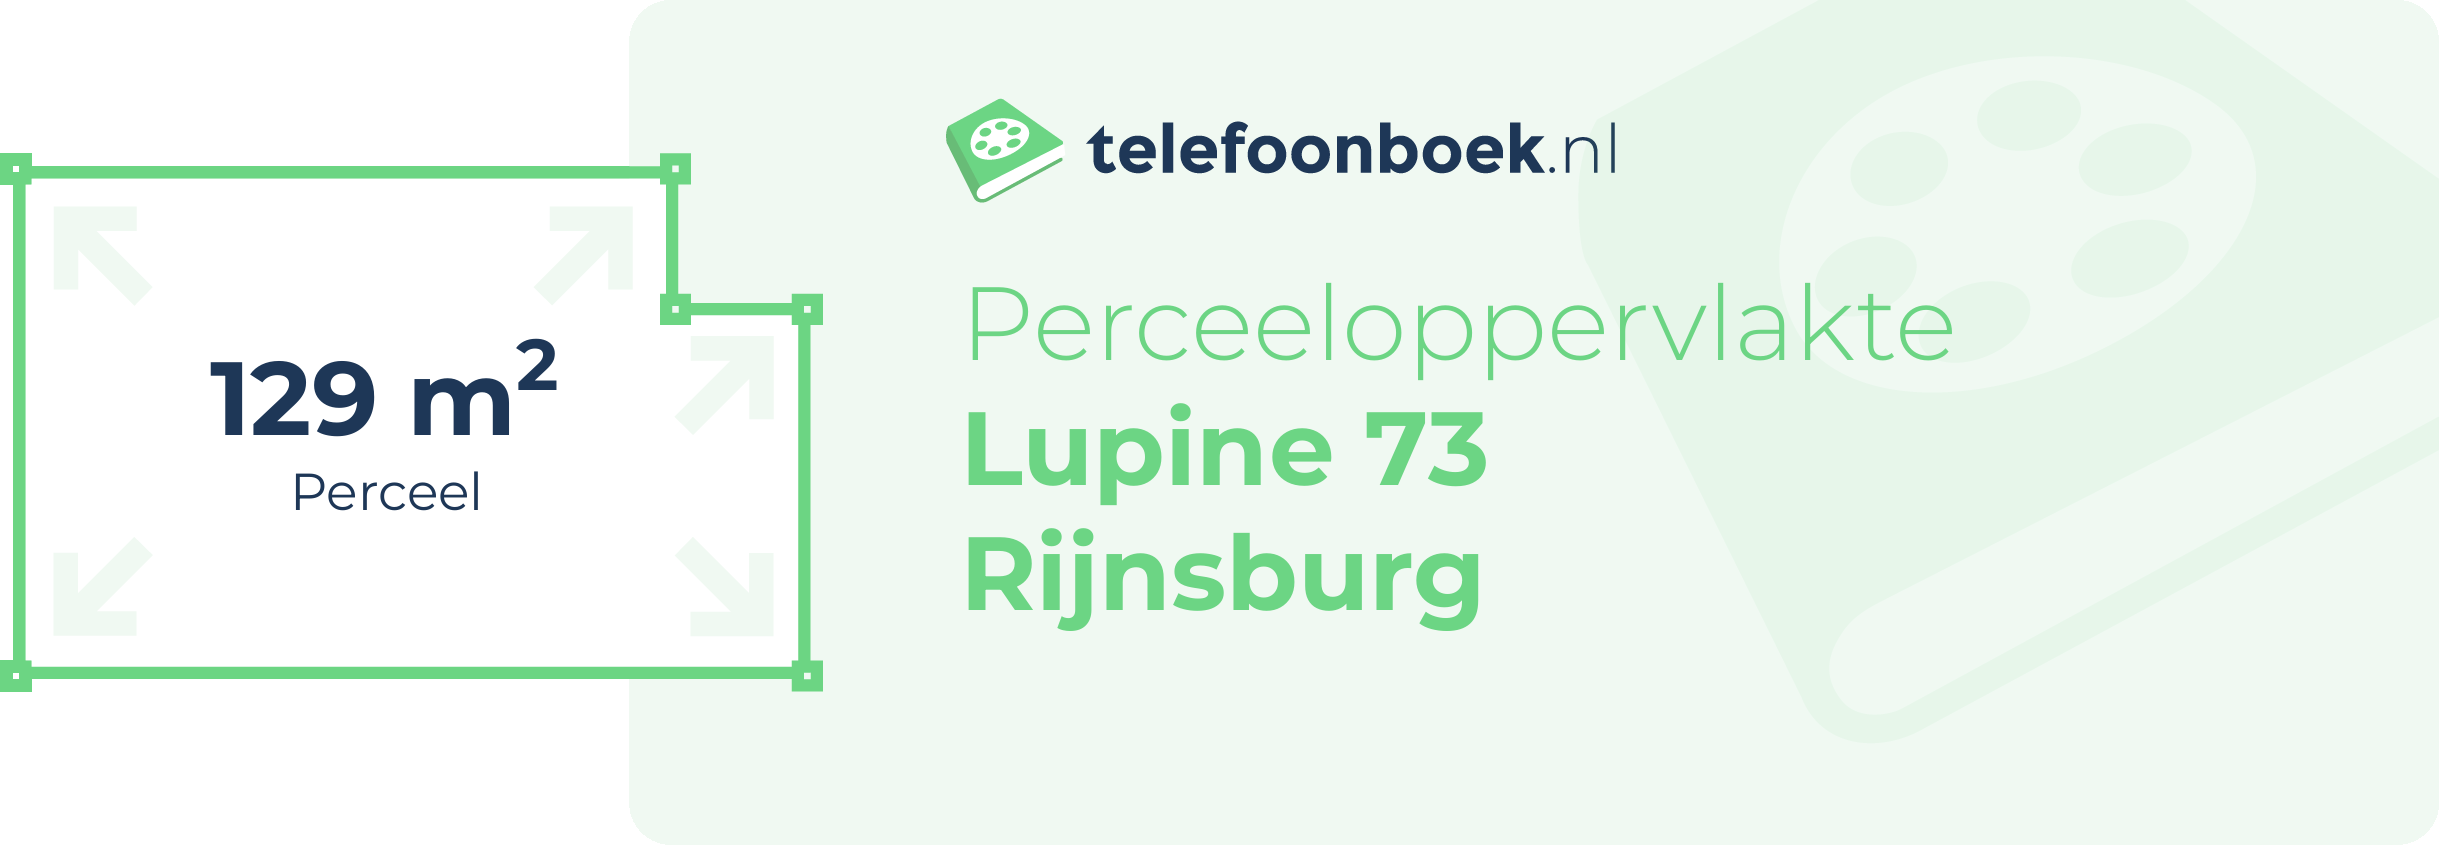 Perceeloppervlakte Lupine 73 Rijnsburg